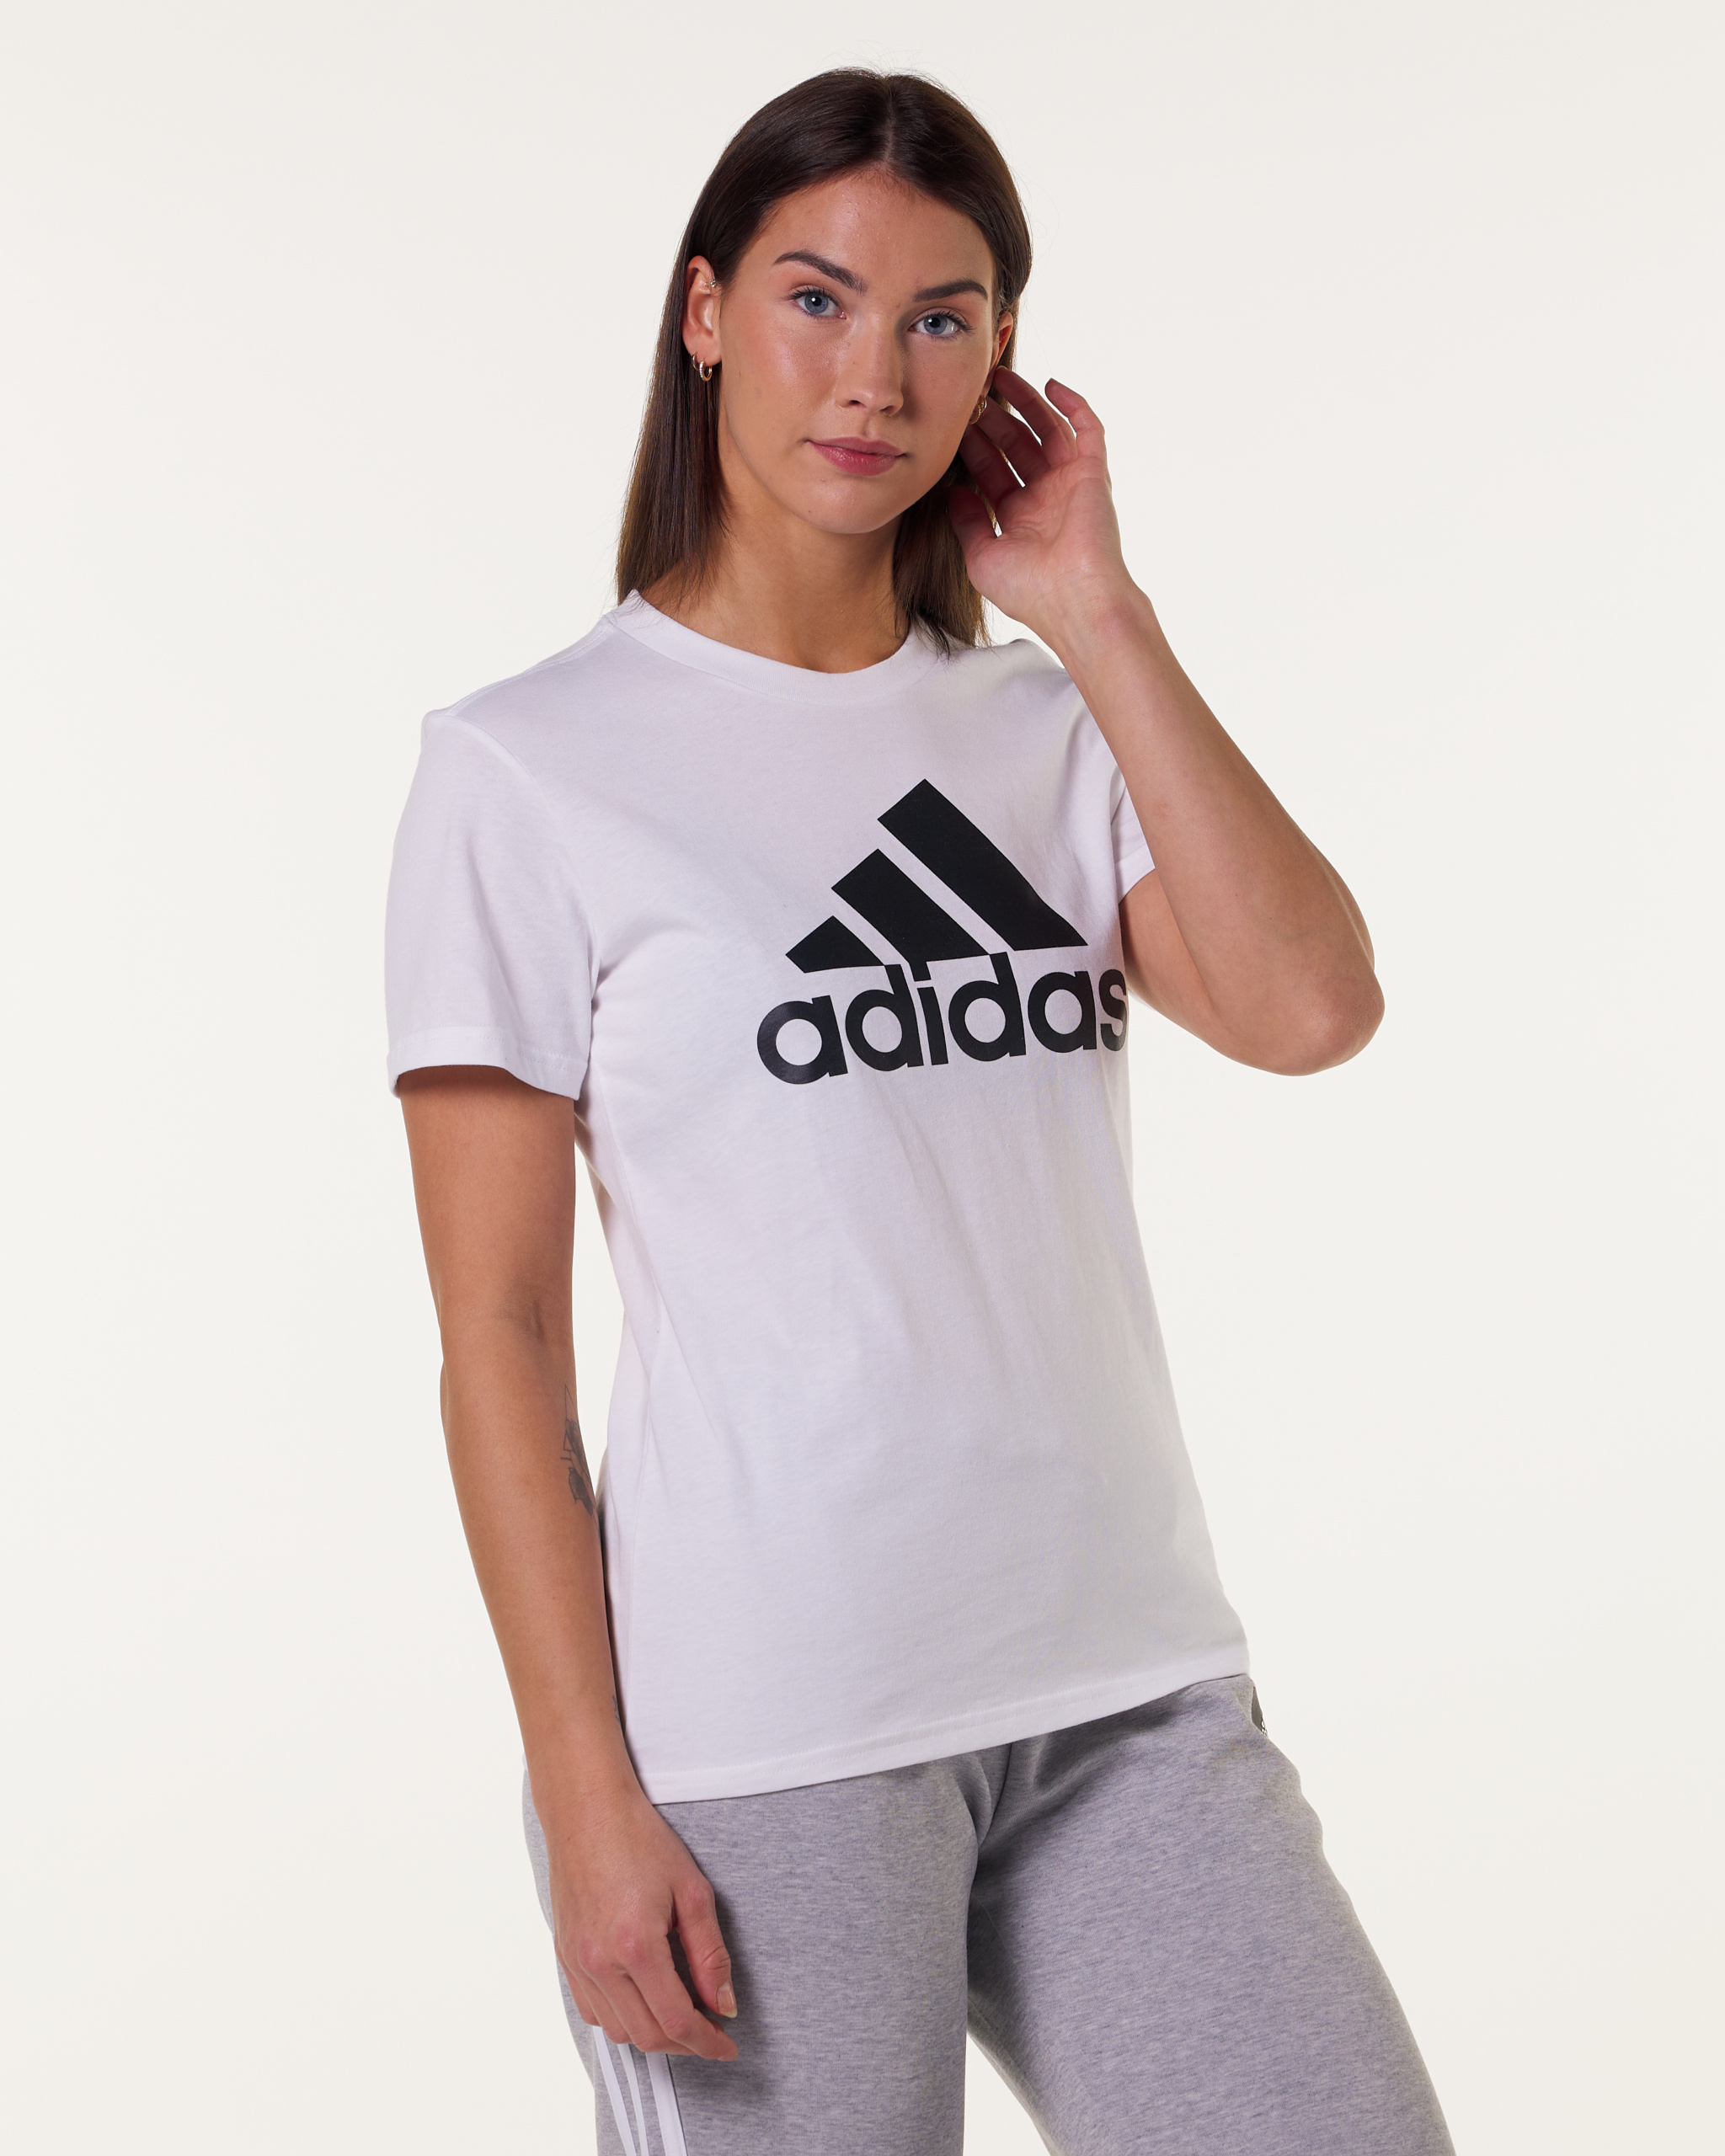 Adidas Essentials White Tee Logo Loungewear